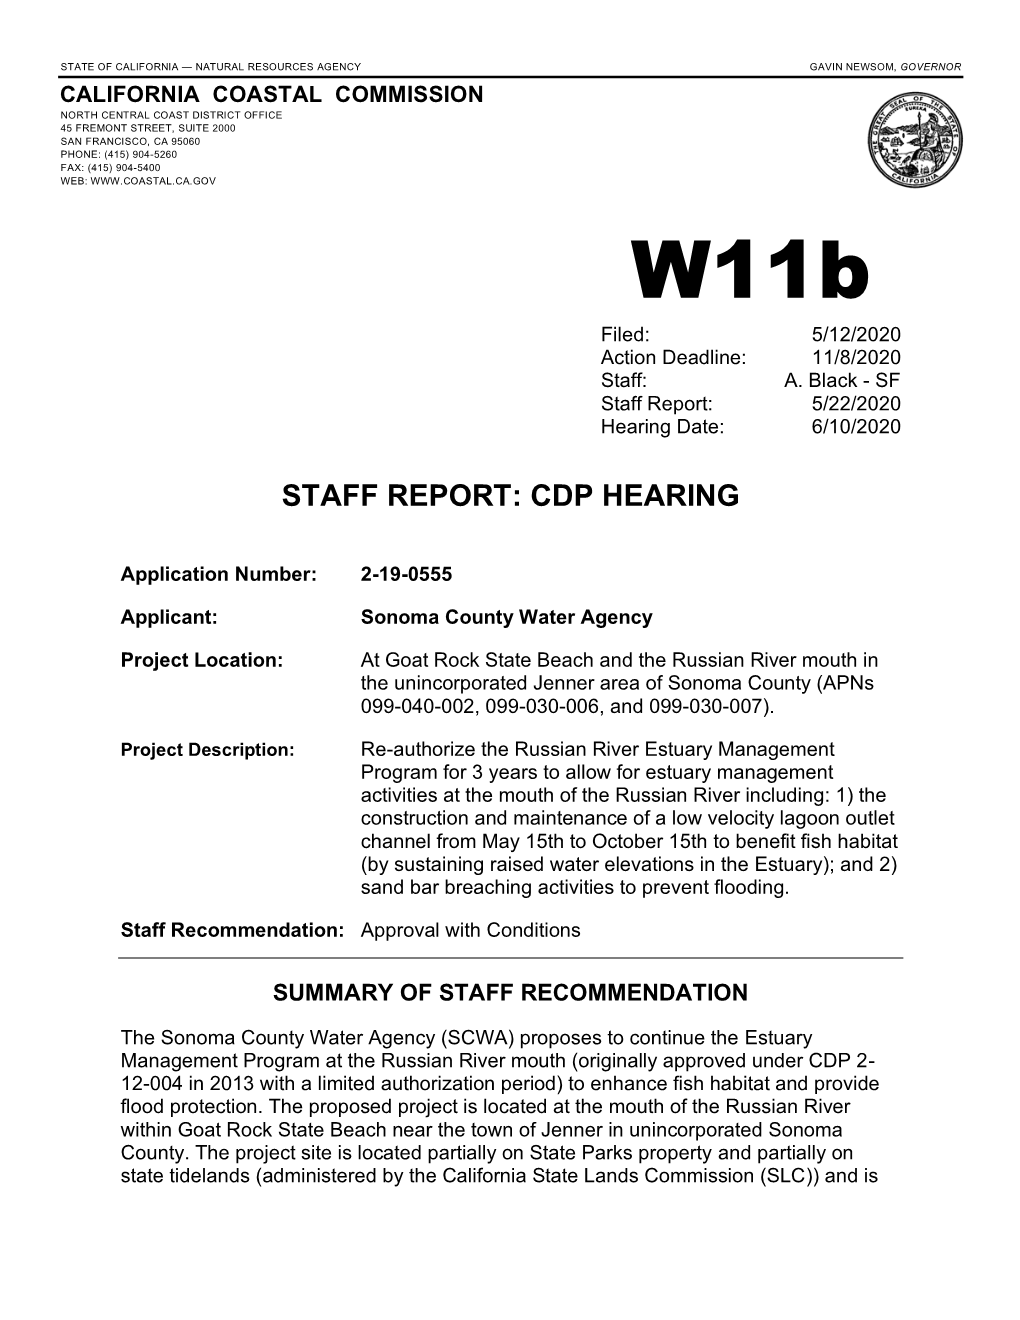 Staff Report: Cdp Hearing